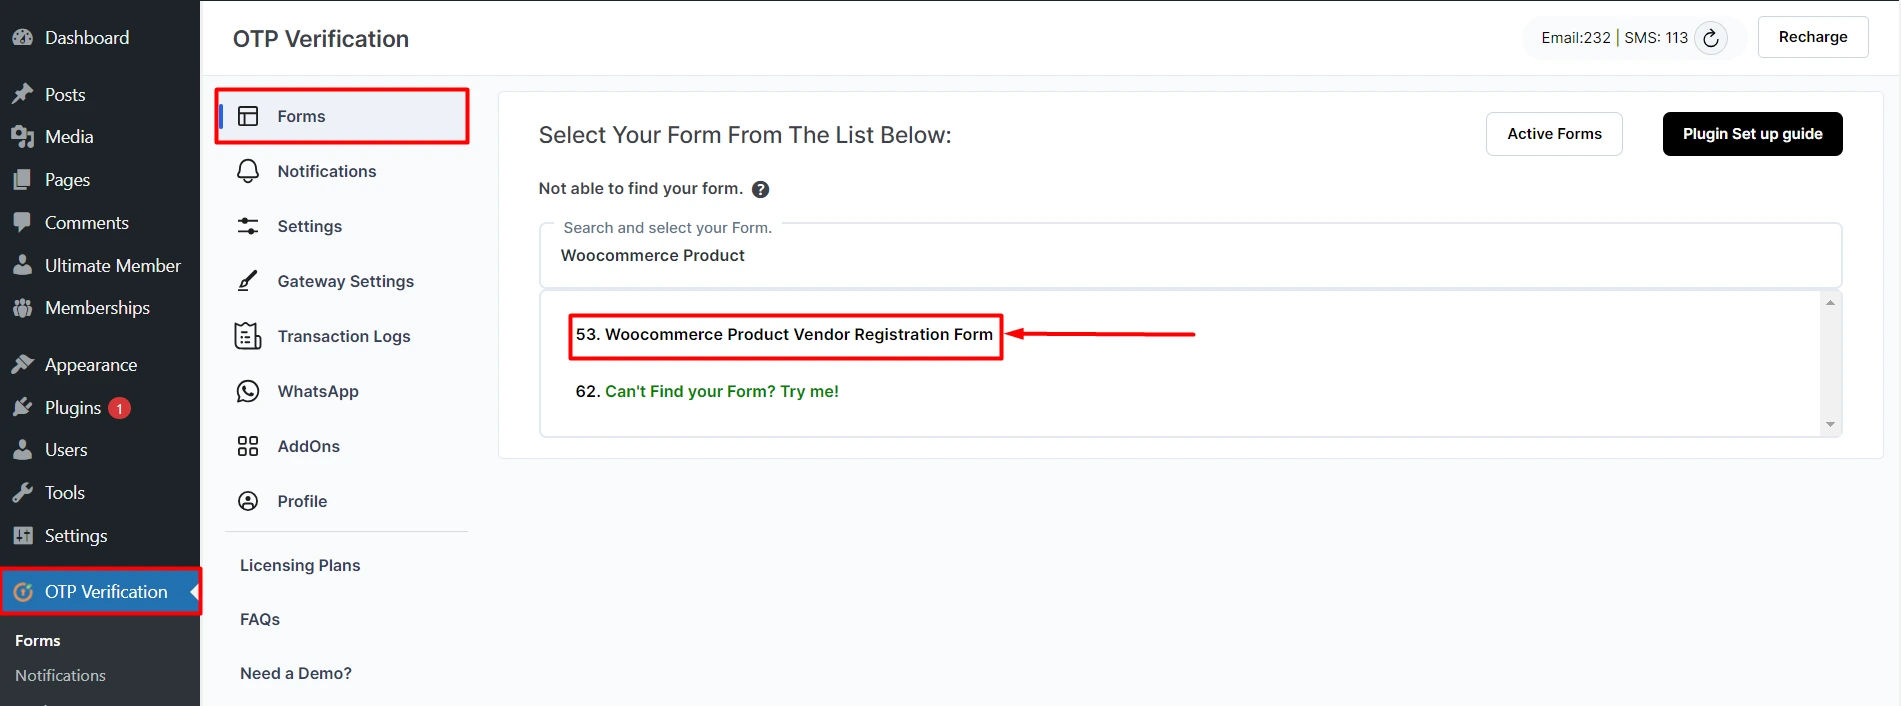 OTP Verification WooCommerce Product Vendor Registration Form Select Form